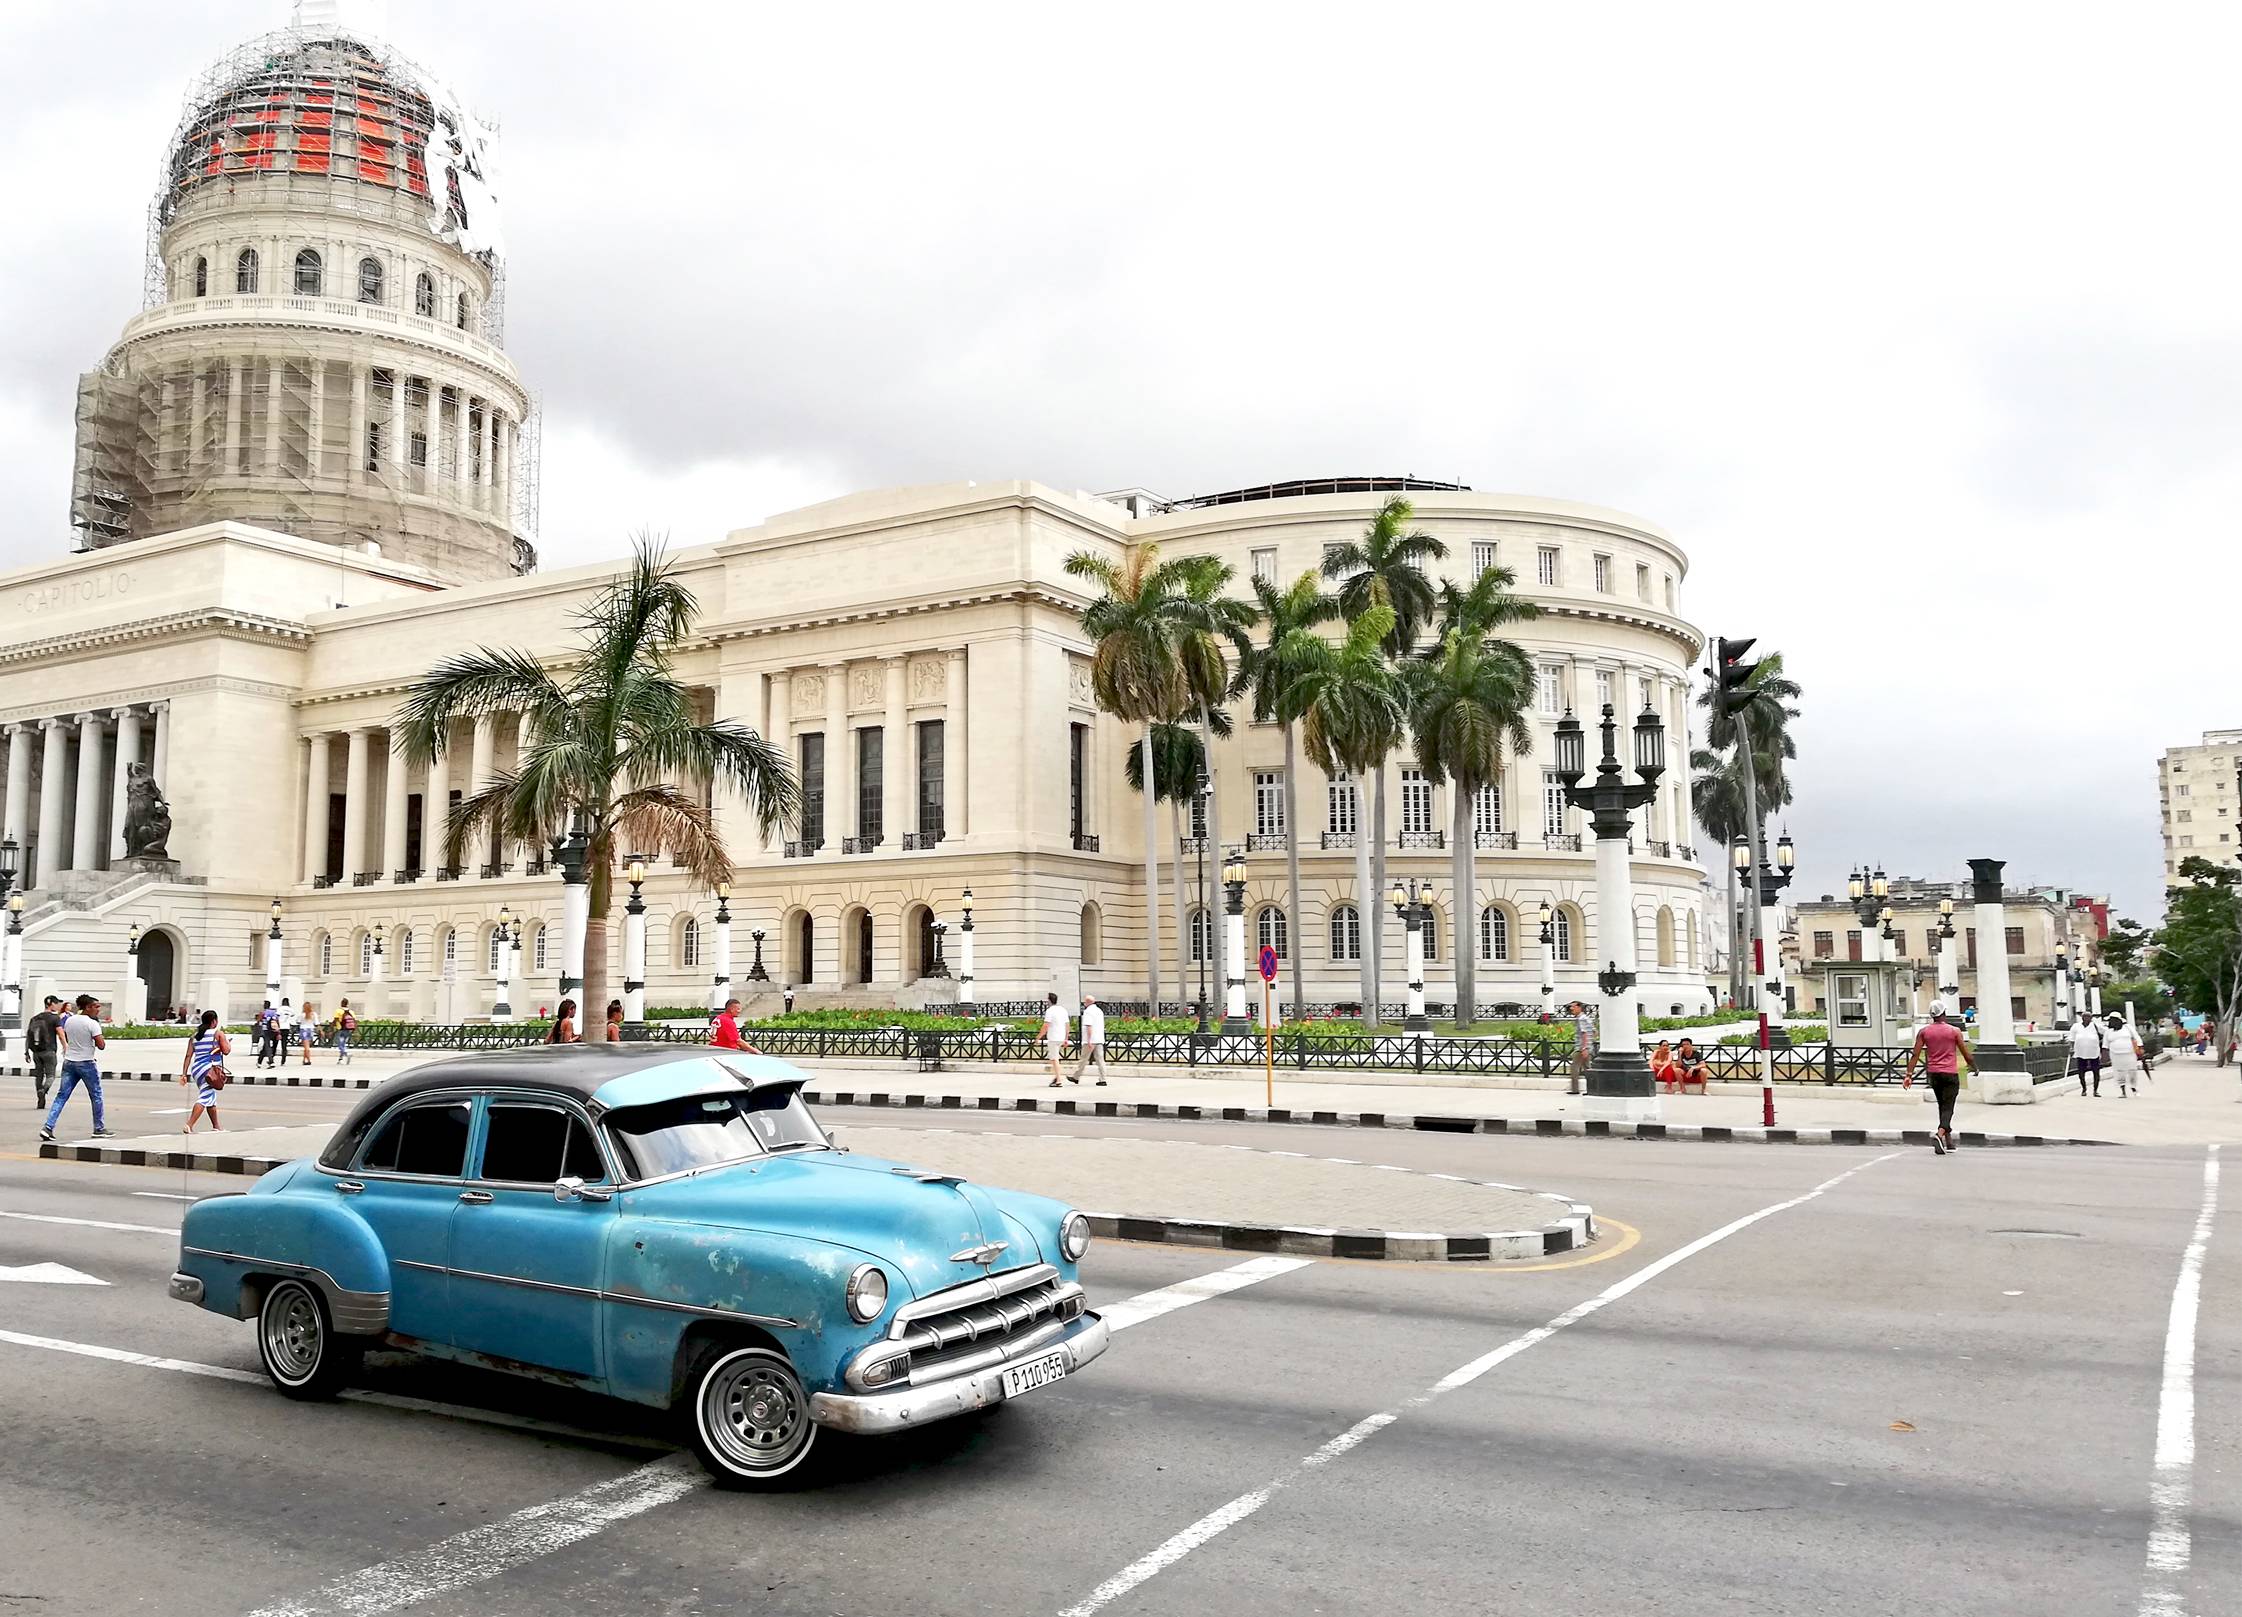 Antique blue car outside of the Havana Capitol building